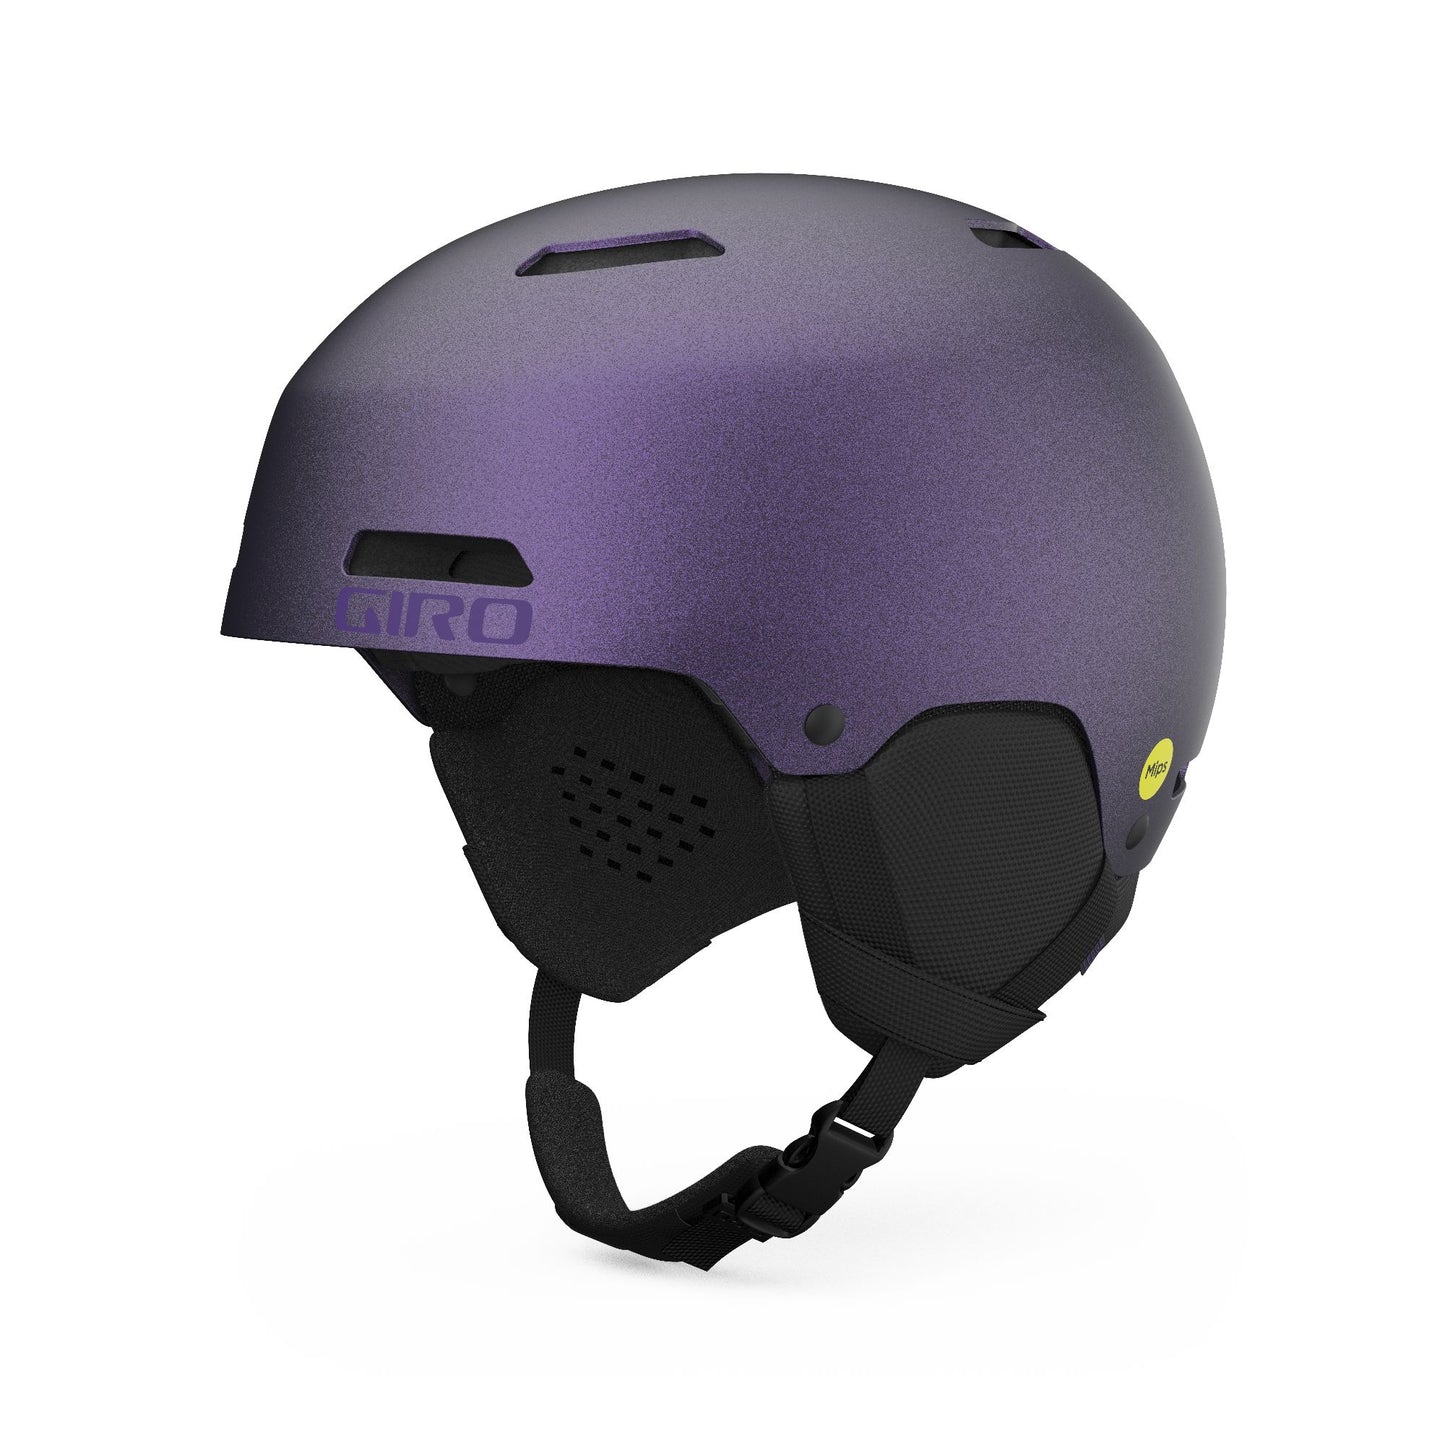 Giro Ledge MIPS Helmet Matte Black/Purple Pearl Snow Helmets